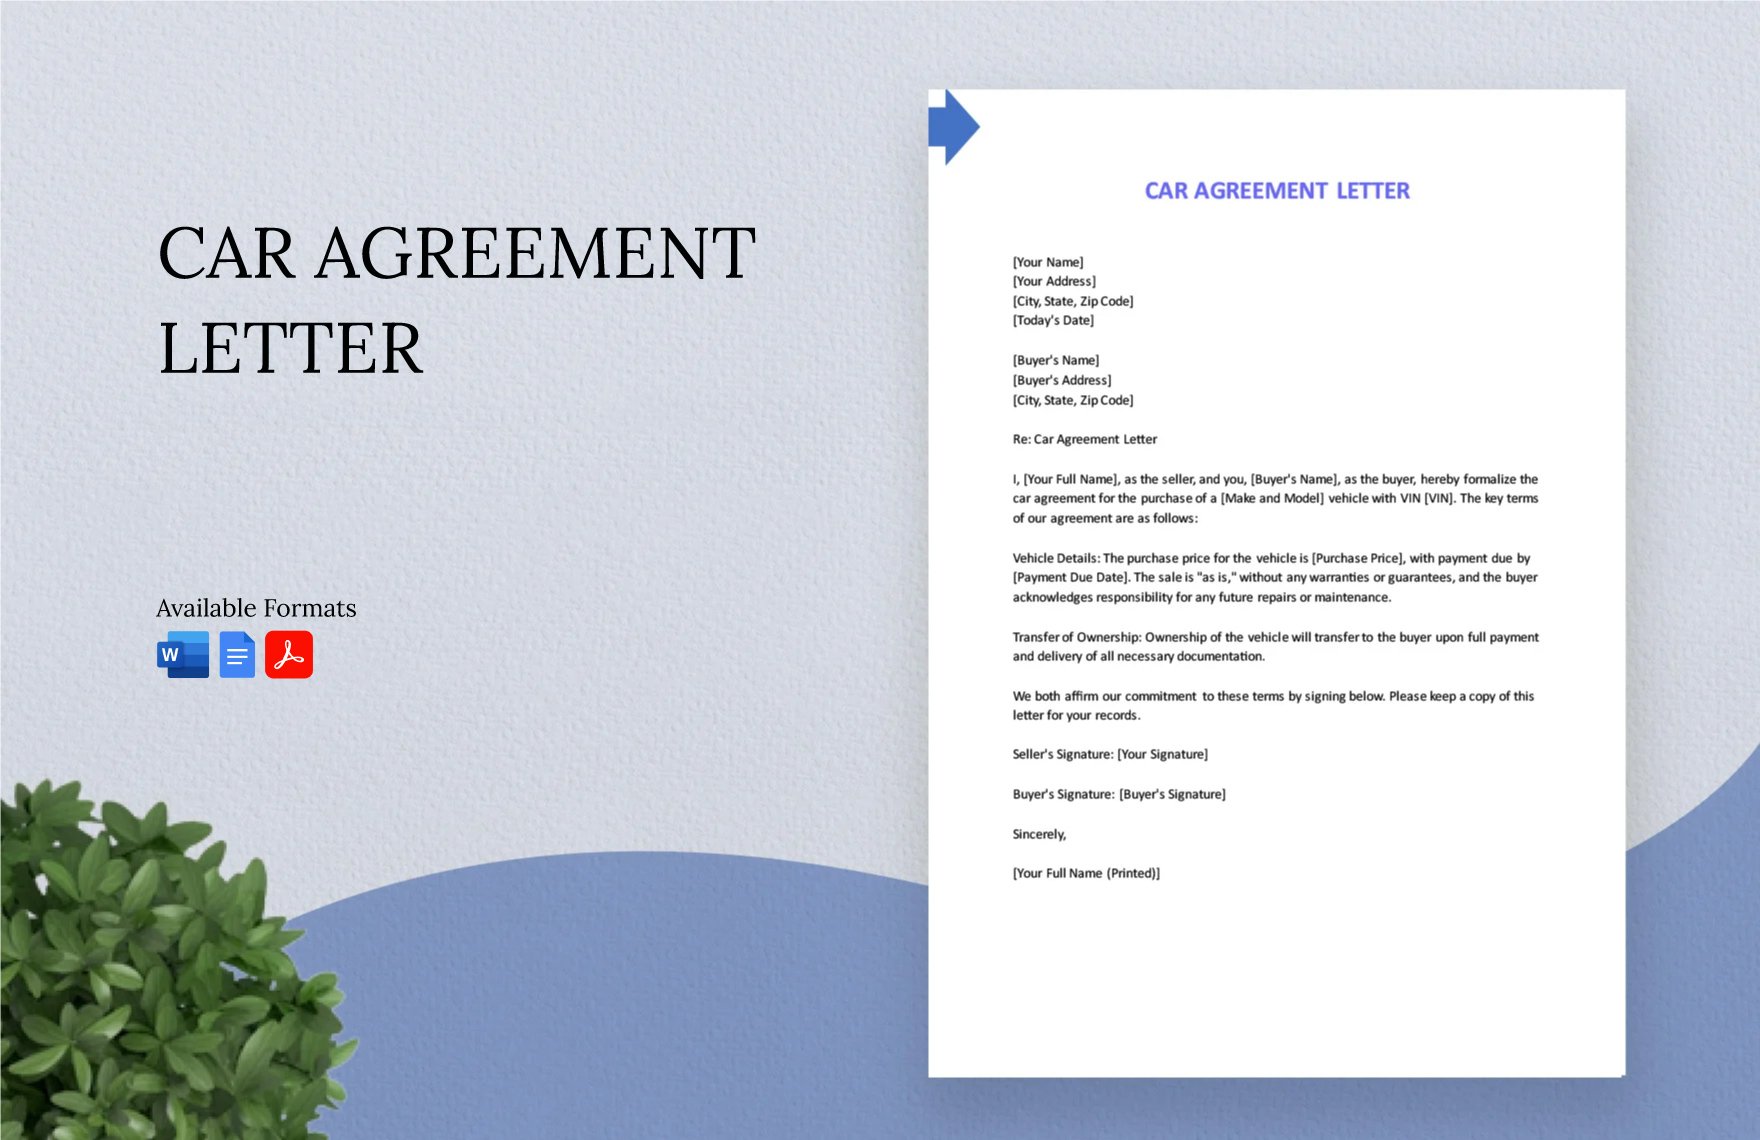 Car Agreement Letter in Word, Google Docs, PDF